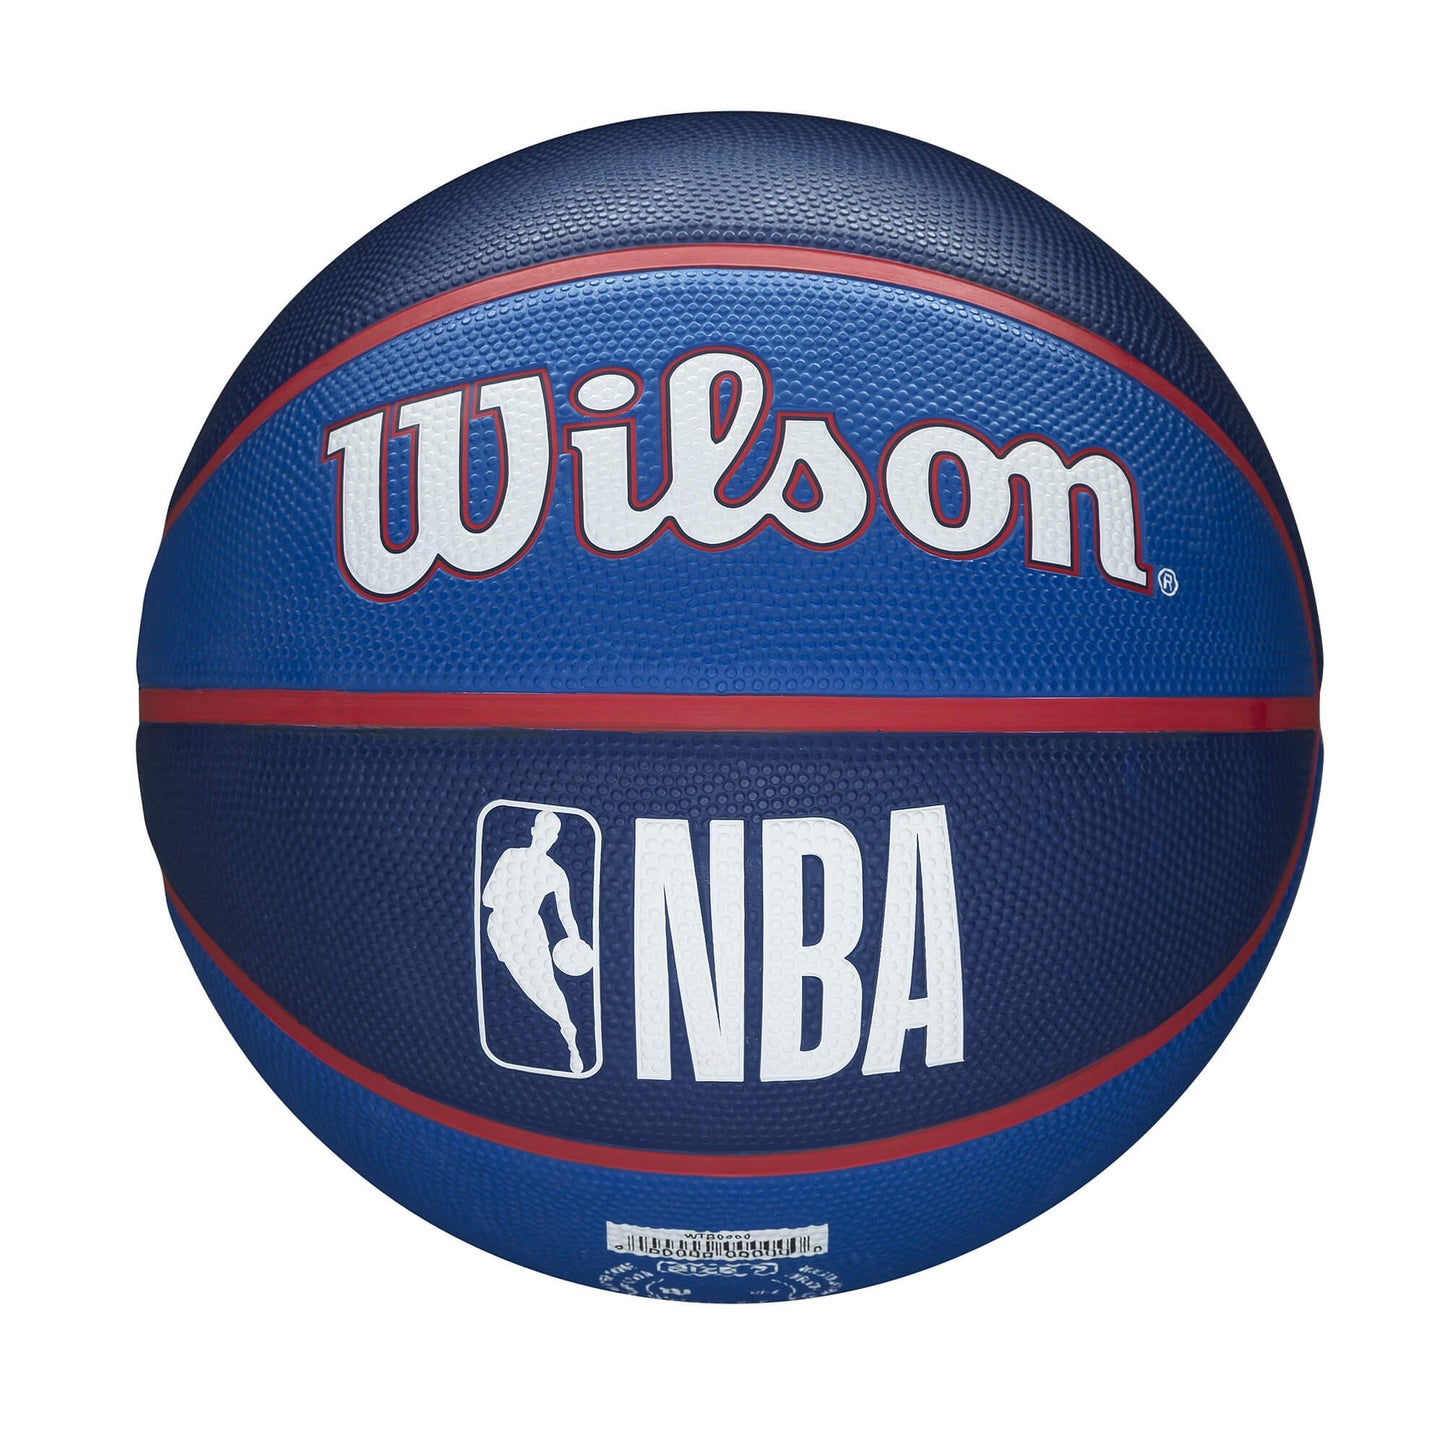 Wilson NBA Team Tribute Basketball Philadelphia 76Ers (sz. 7)